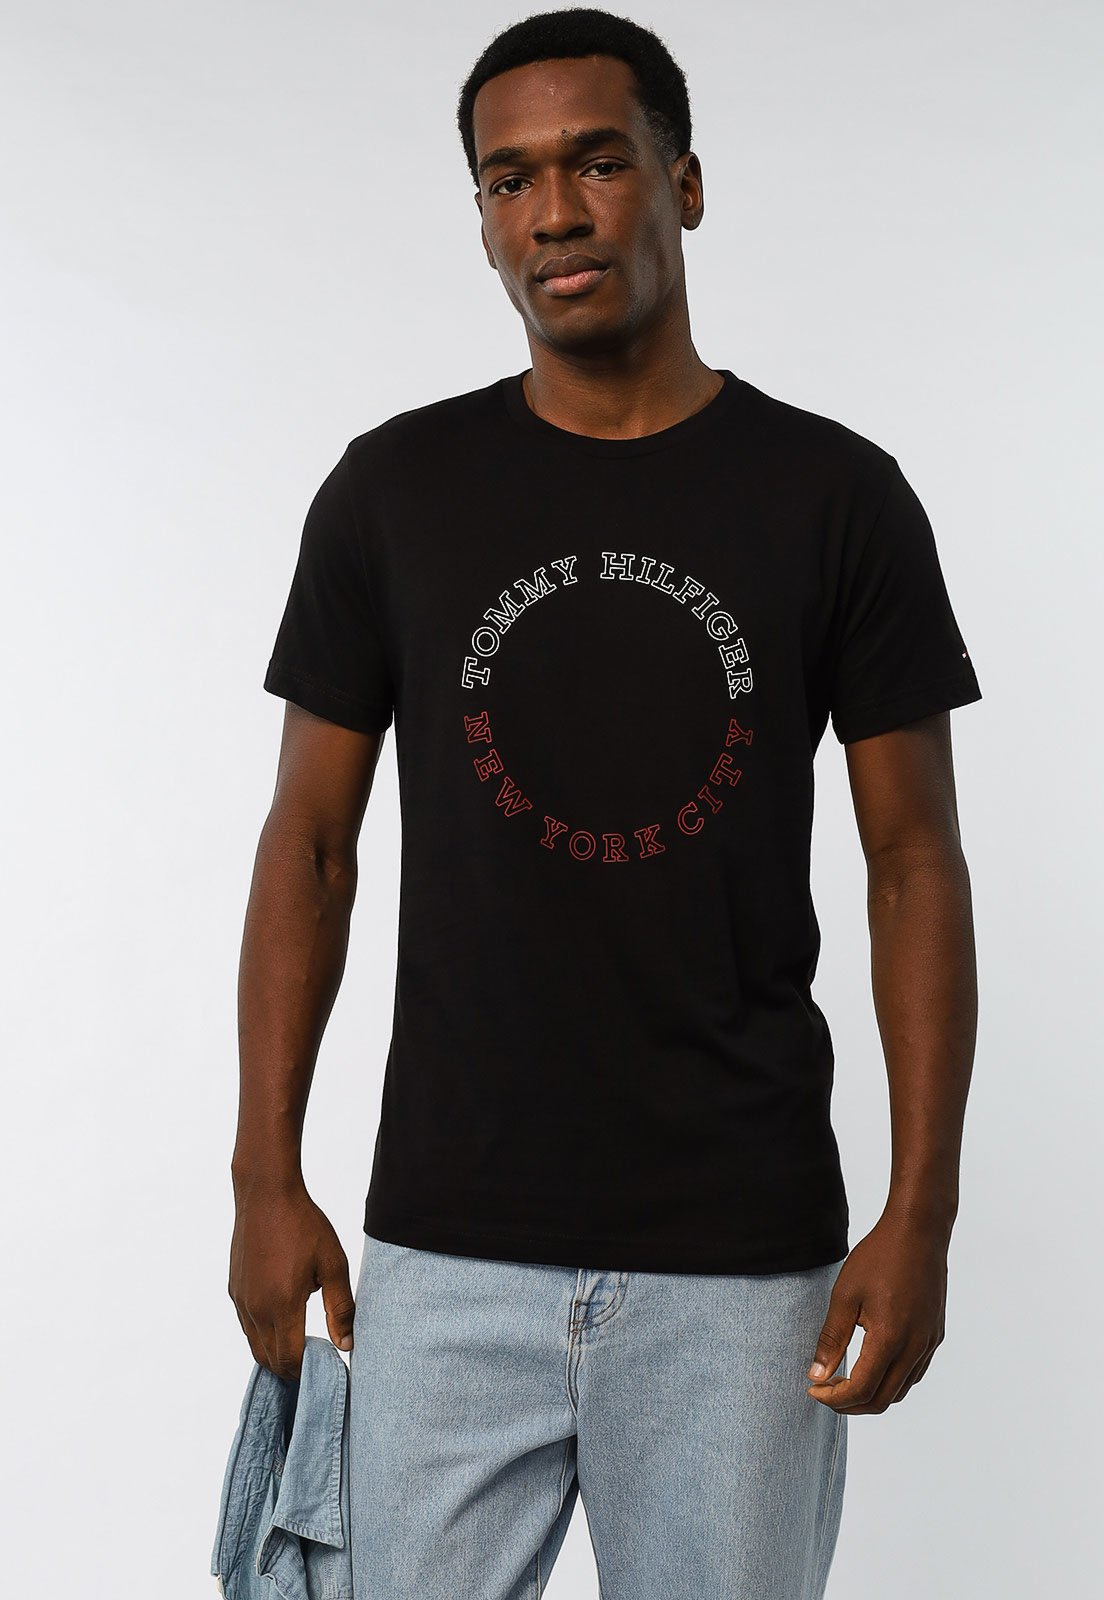 Camiseta Tommy Hilfiger Modern Preto - KS MULTIMARCAS